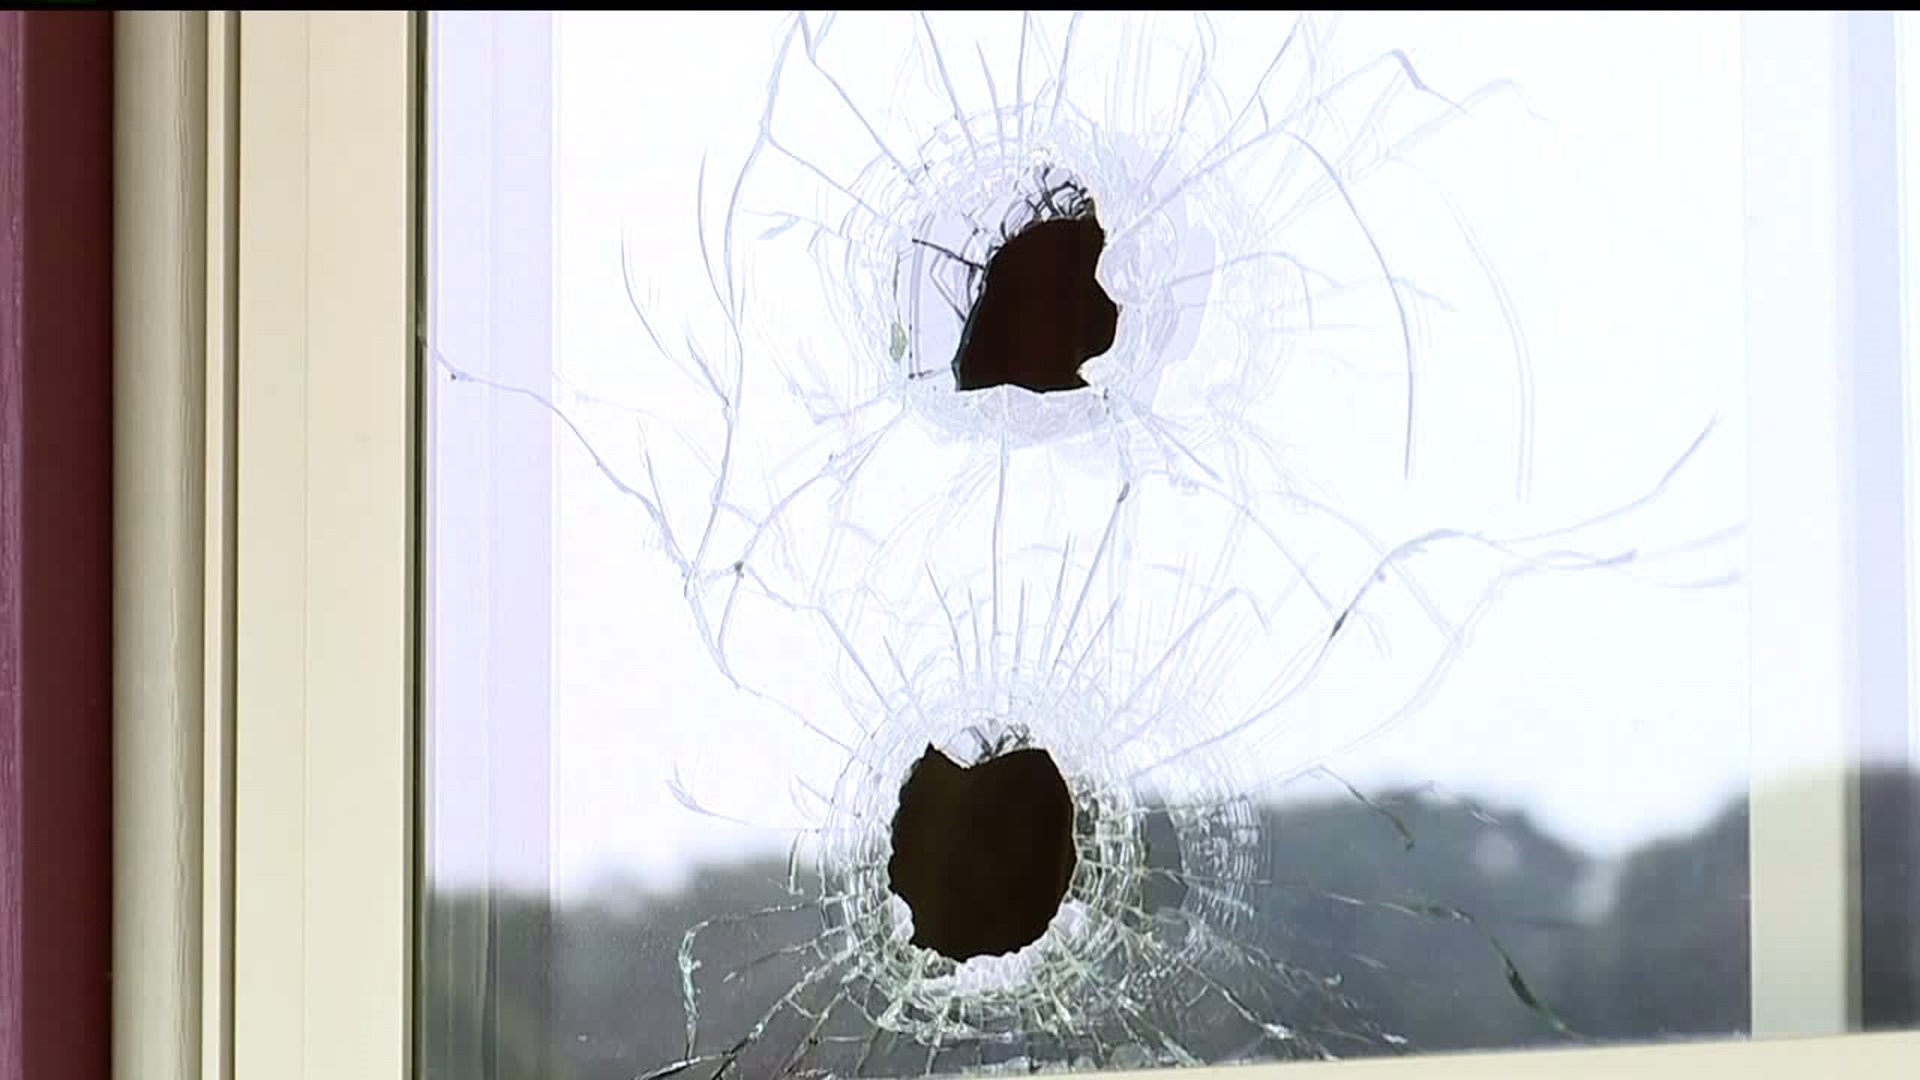 Stray bullets go through home narrowly missing children inside